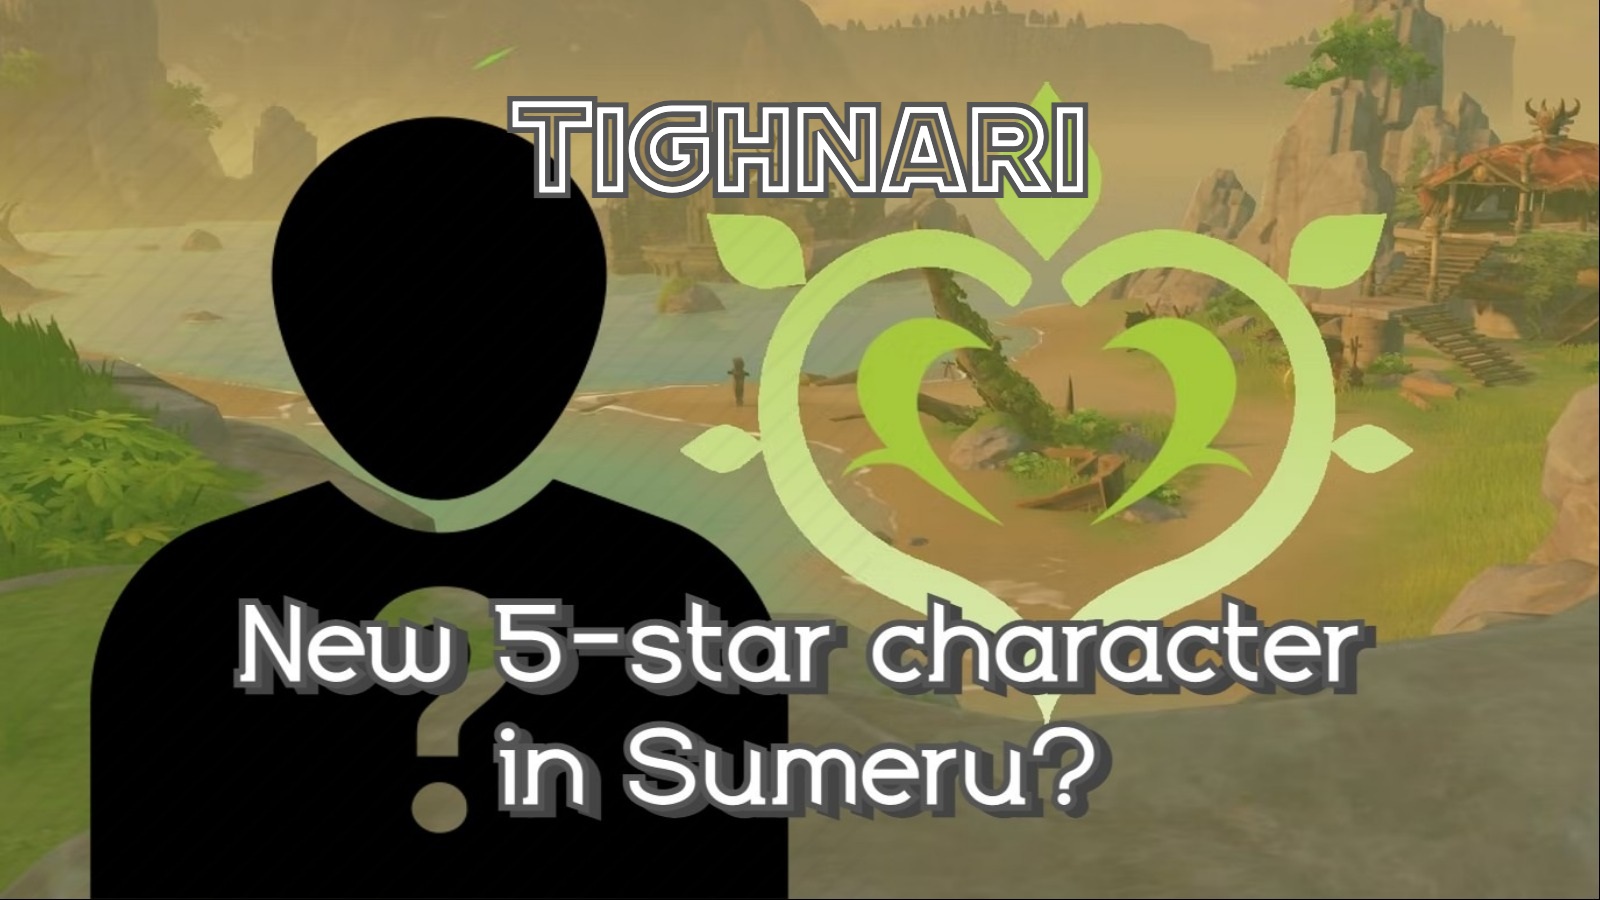 Genshin Impact 5-star character in Sumeru - Tighnari